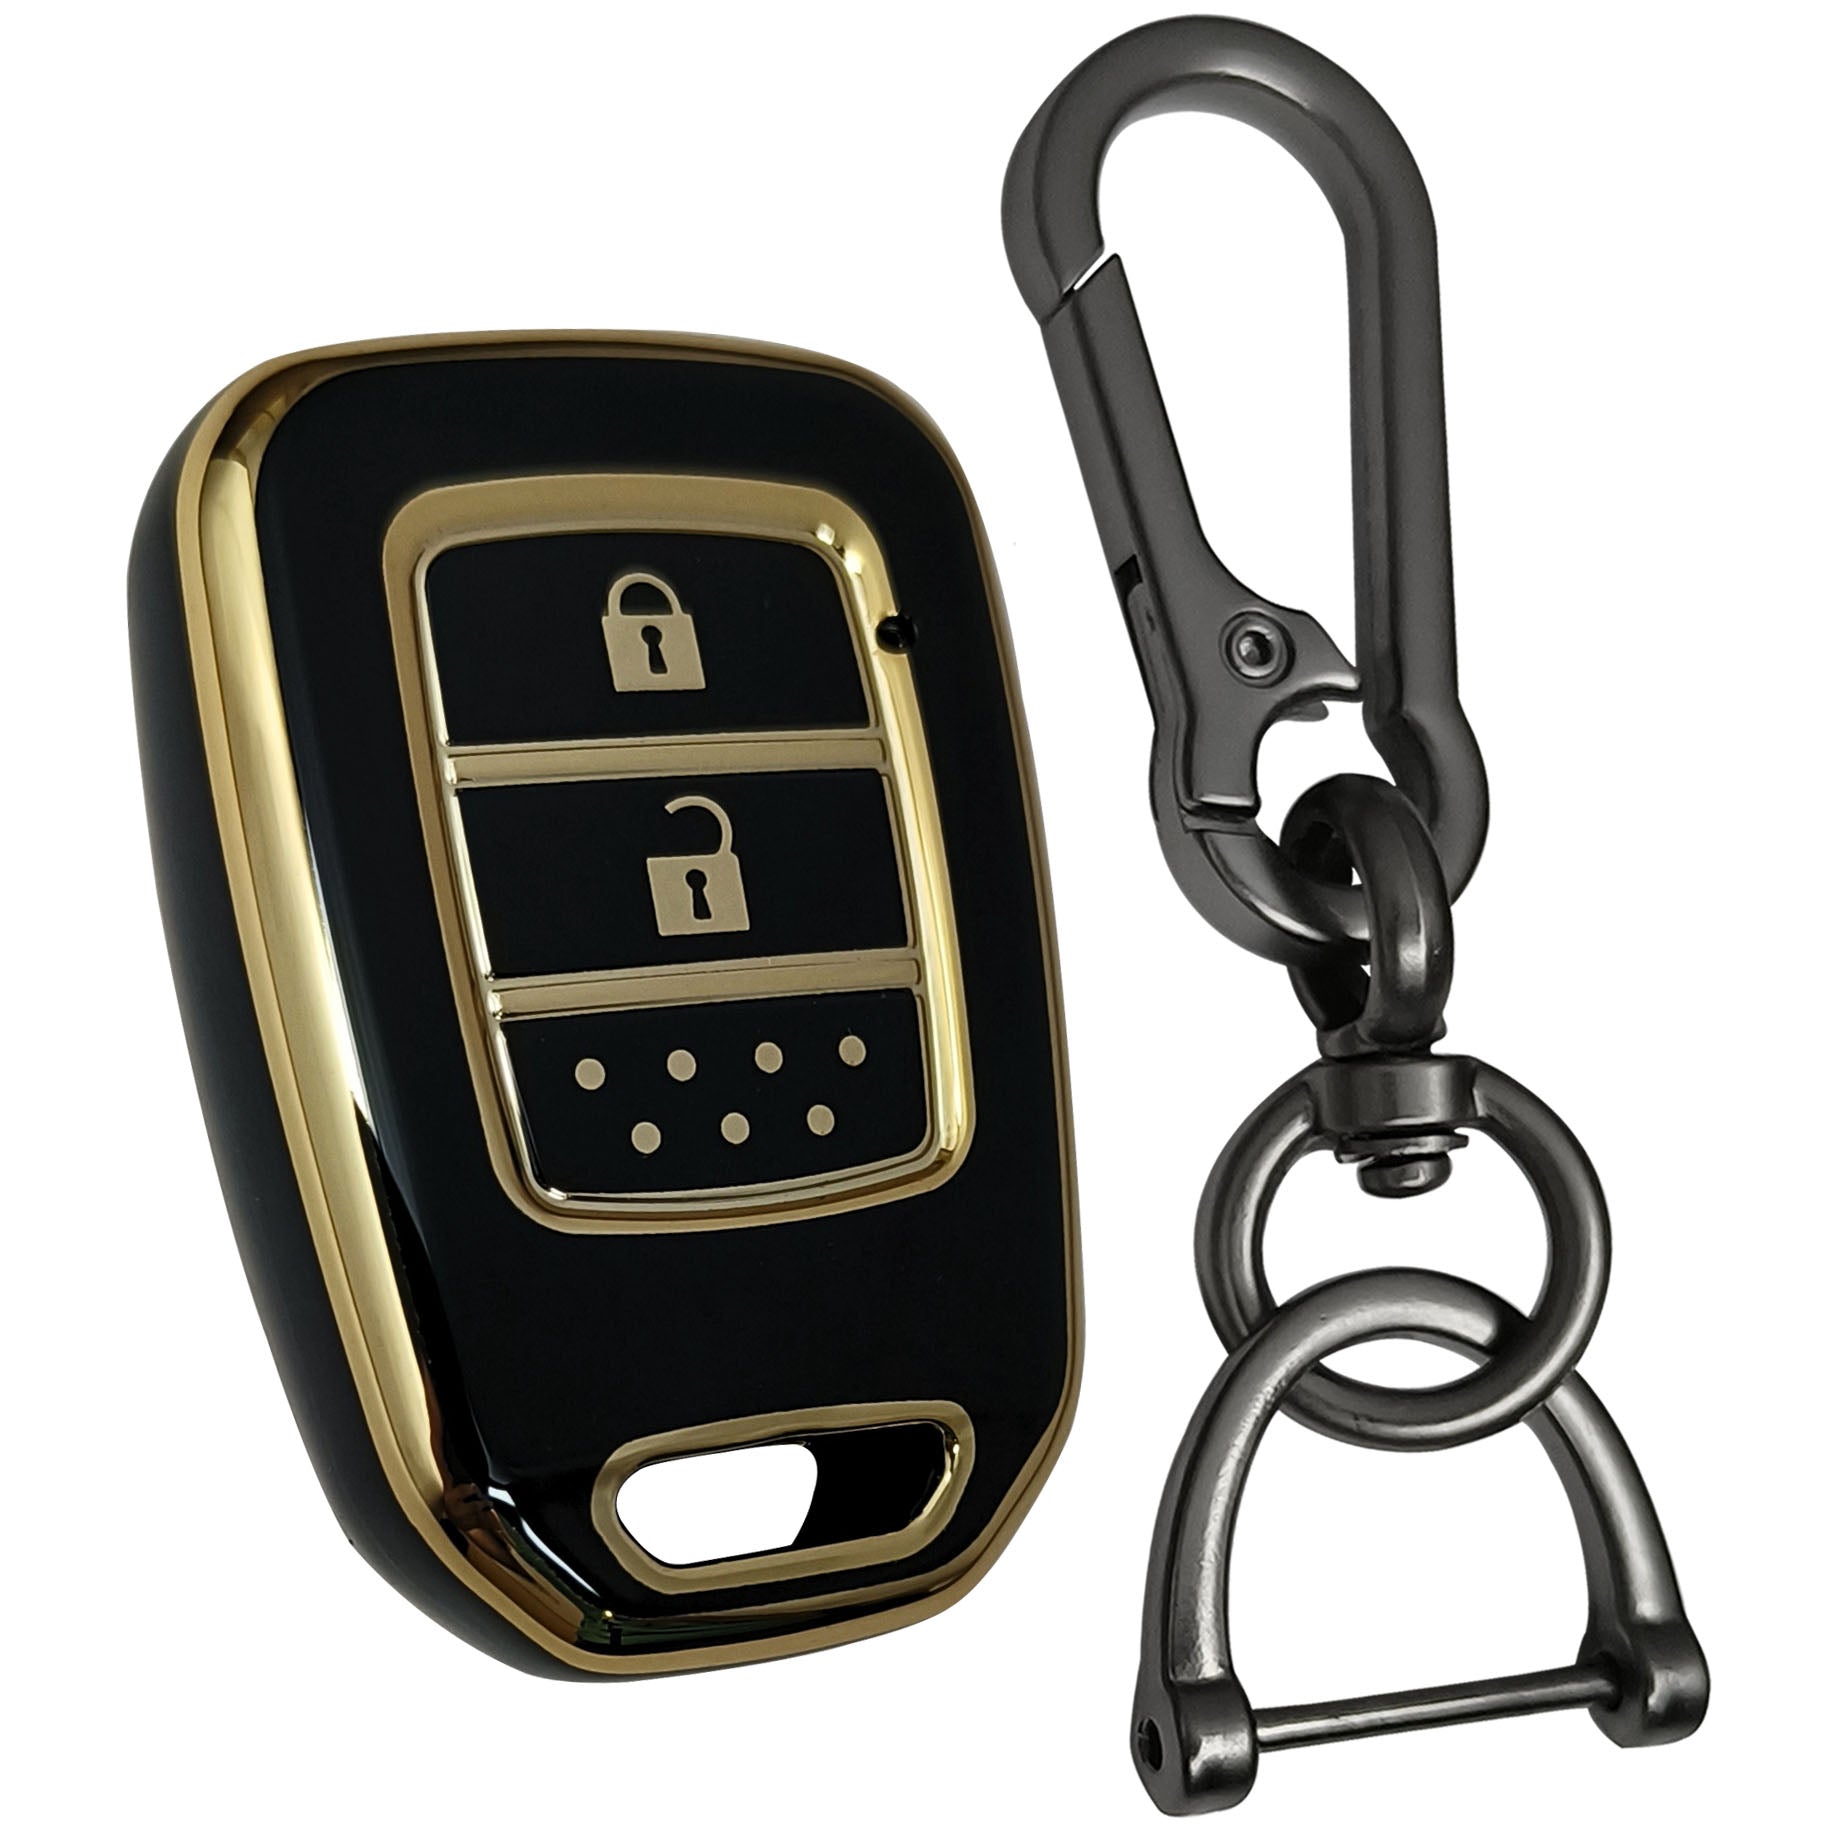 honda city jazz amaze 2 button remote tpu black gold key cover case accessories keychain